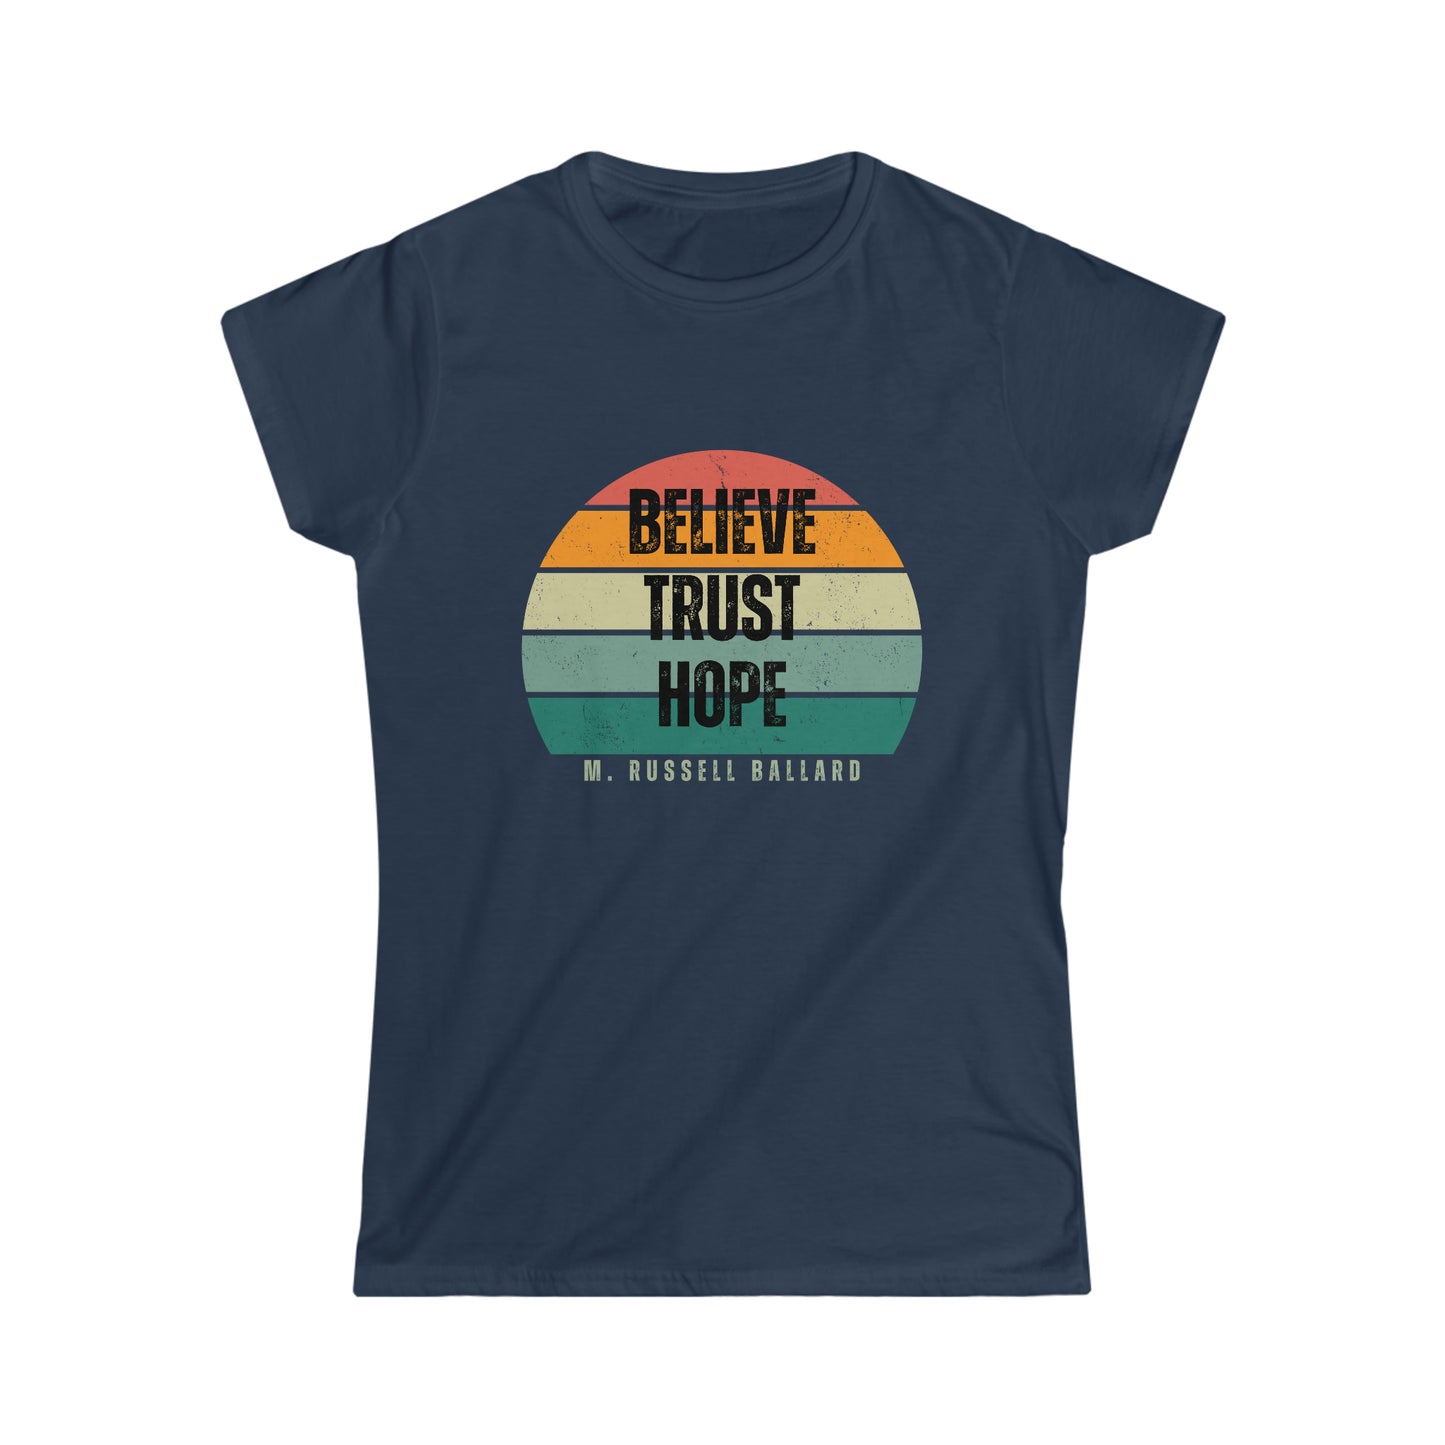 Women's Softstyle Tee, Believe, Trust, Hope T-Shirt, Gift for Her, Christian Shirt, Religious Shirt, Bible Verse Shirt